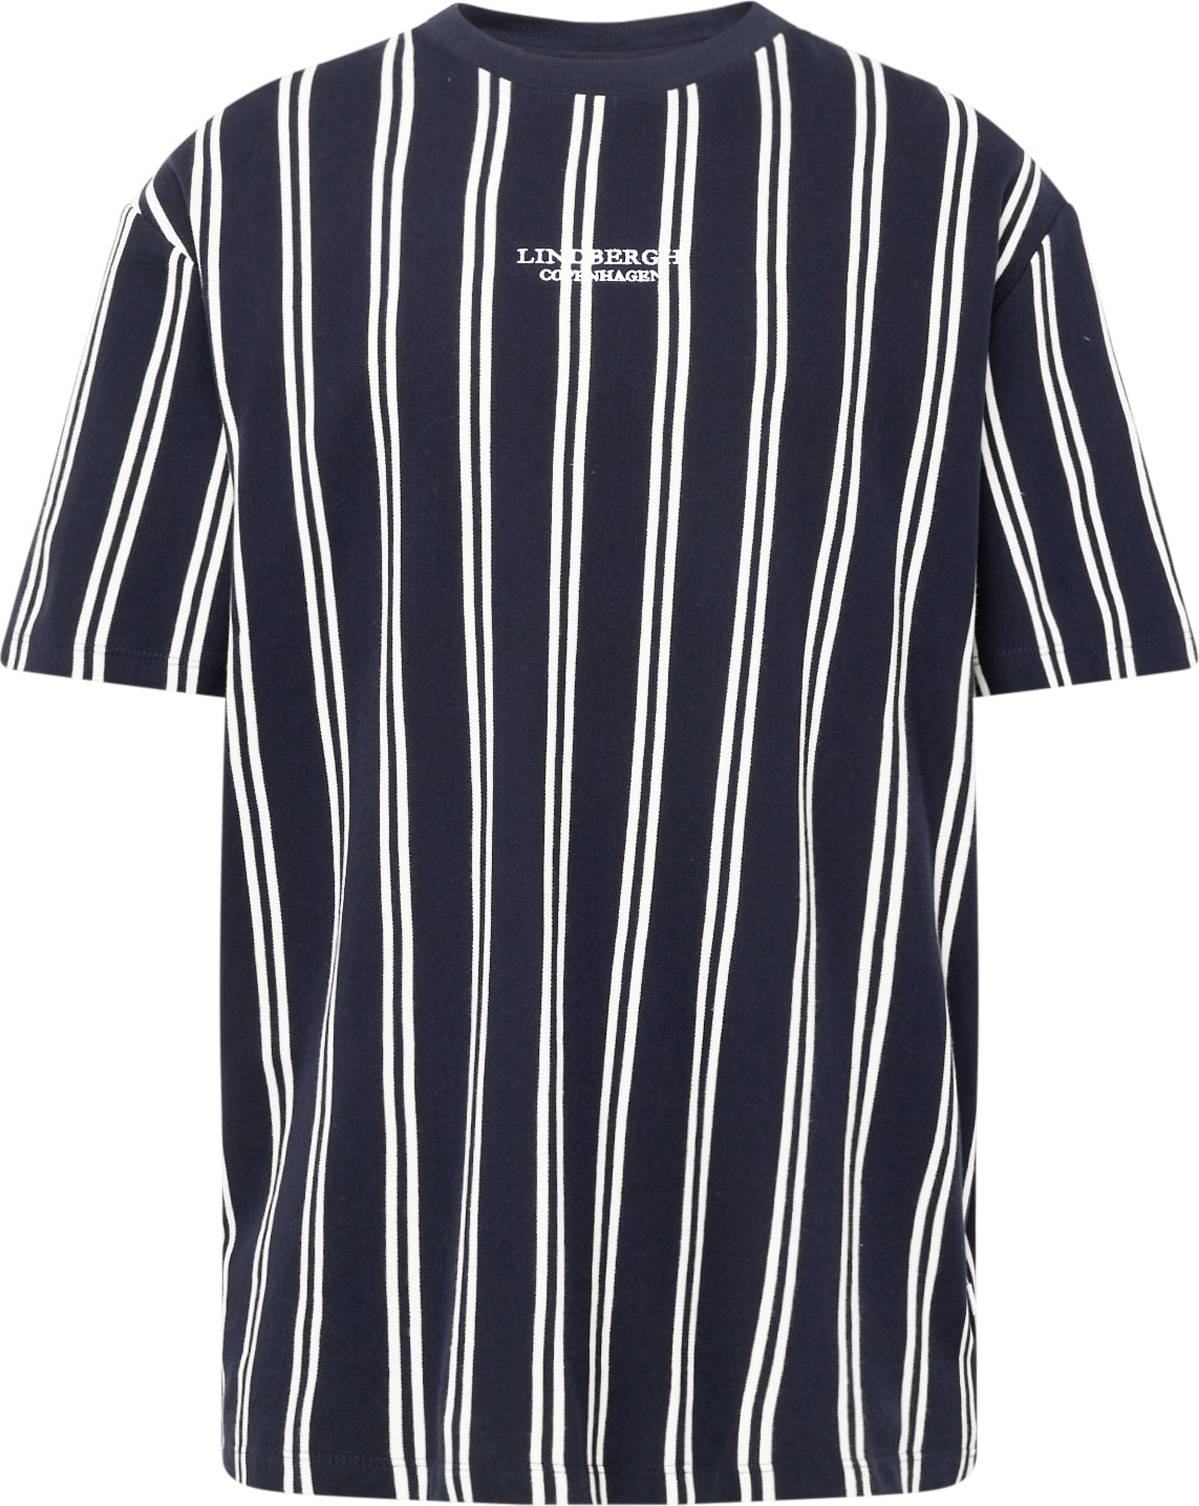 Tričko lindbergh námořnická modř / bílá